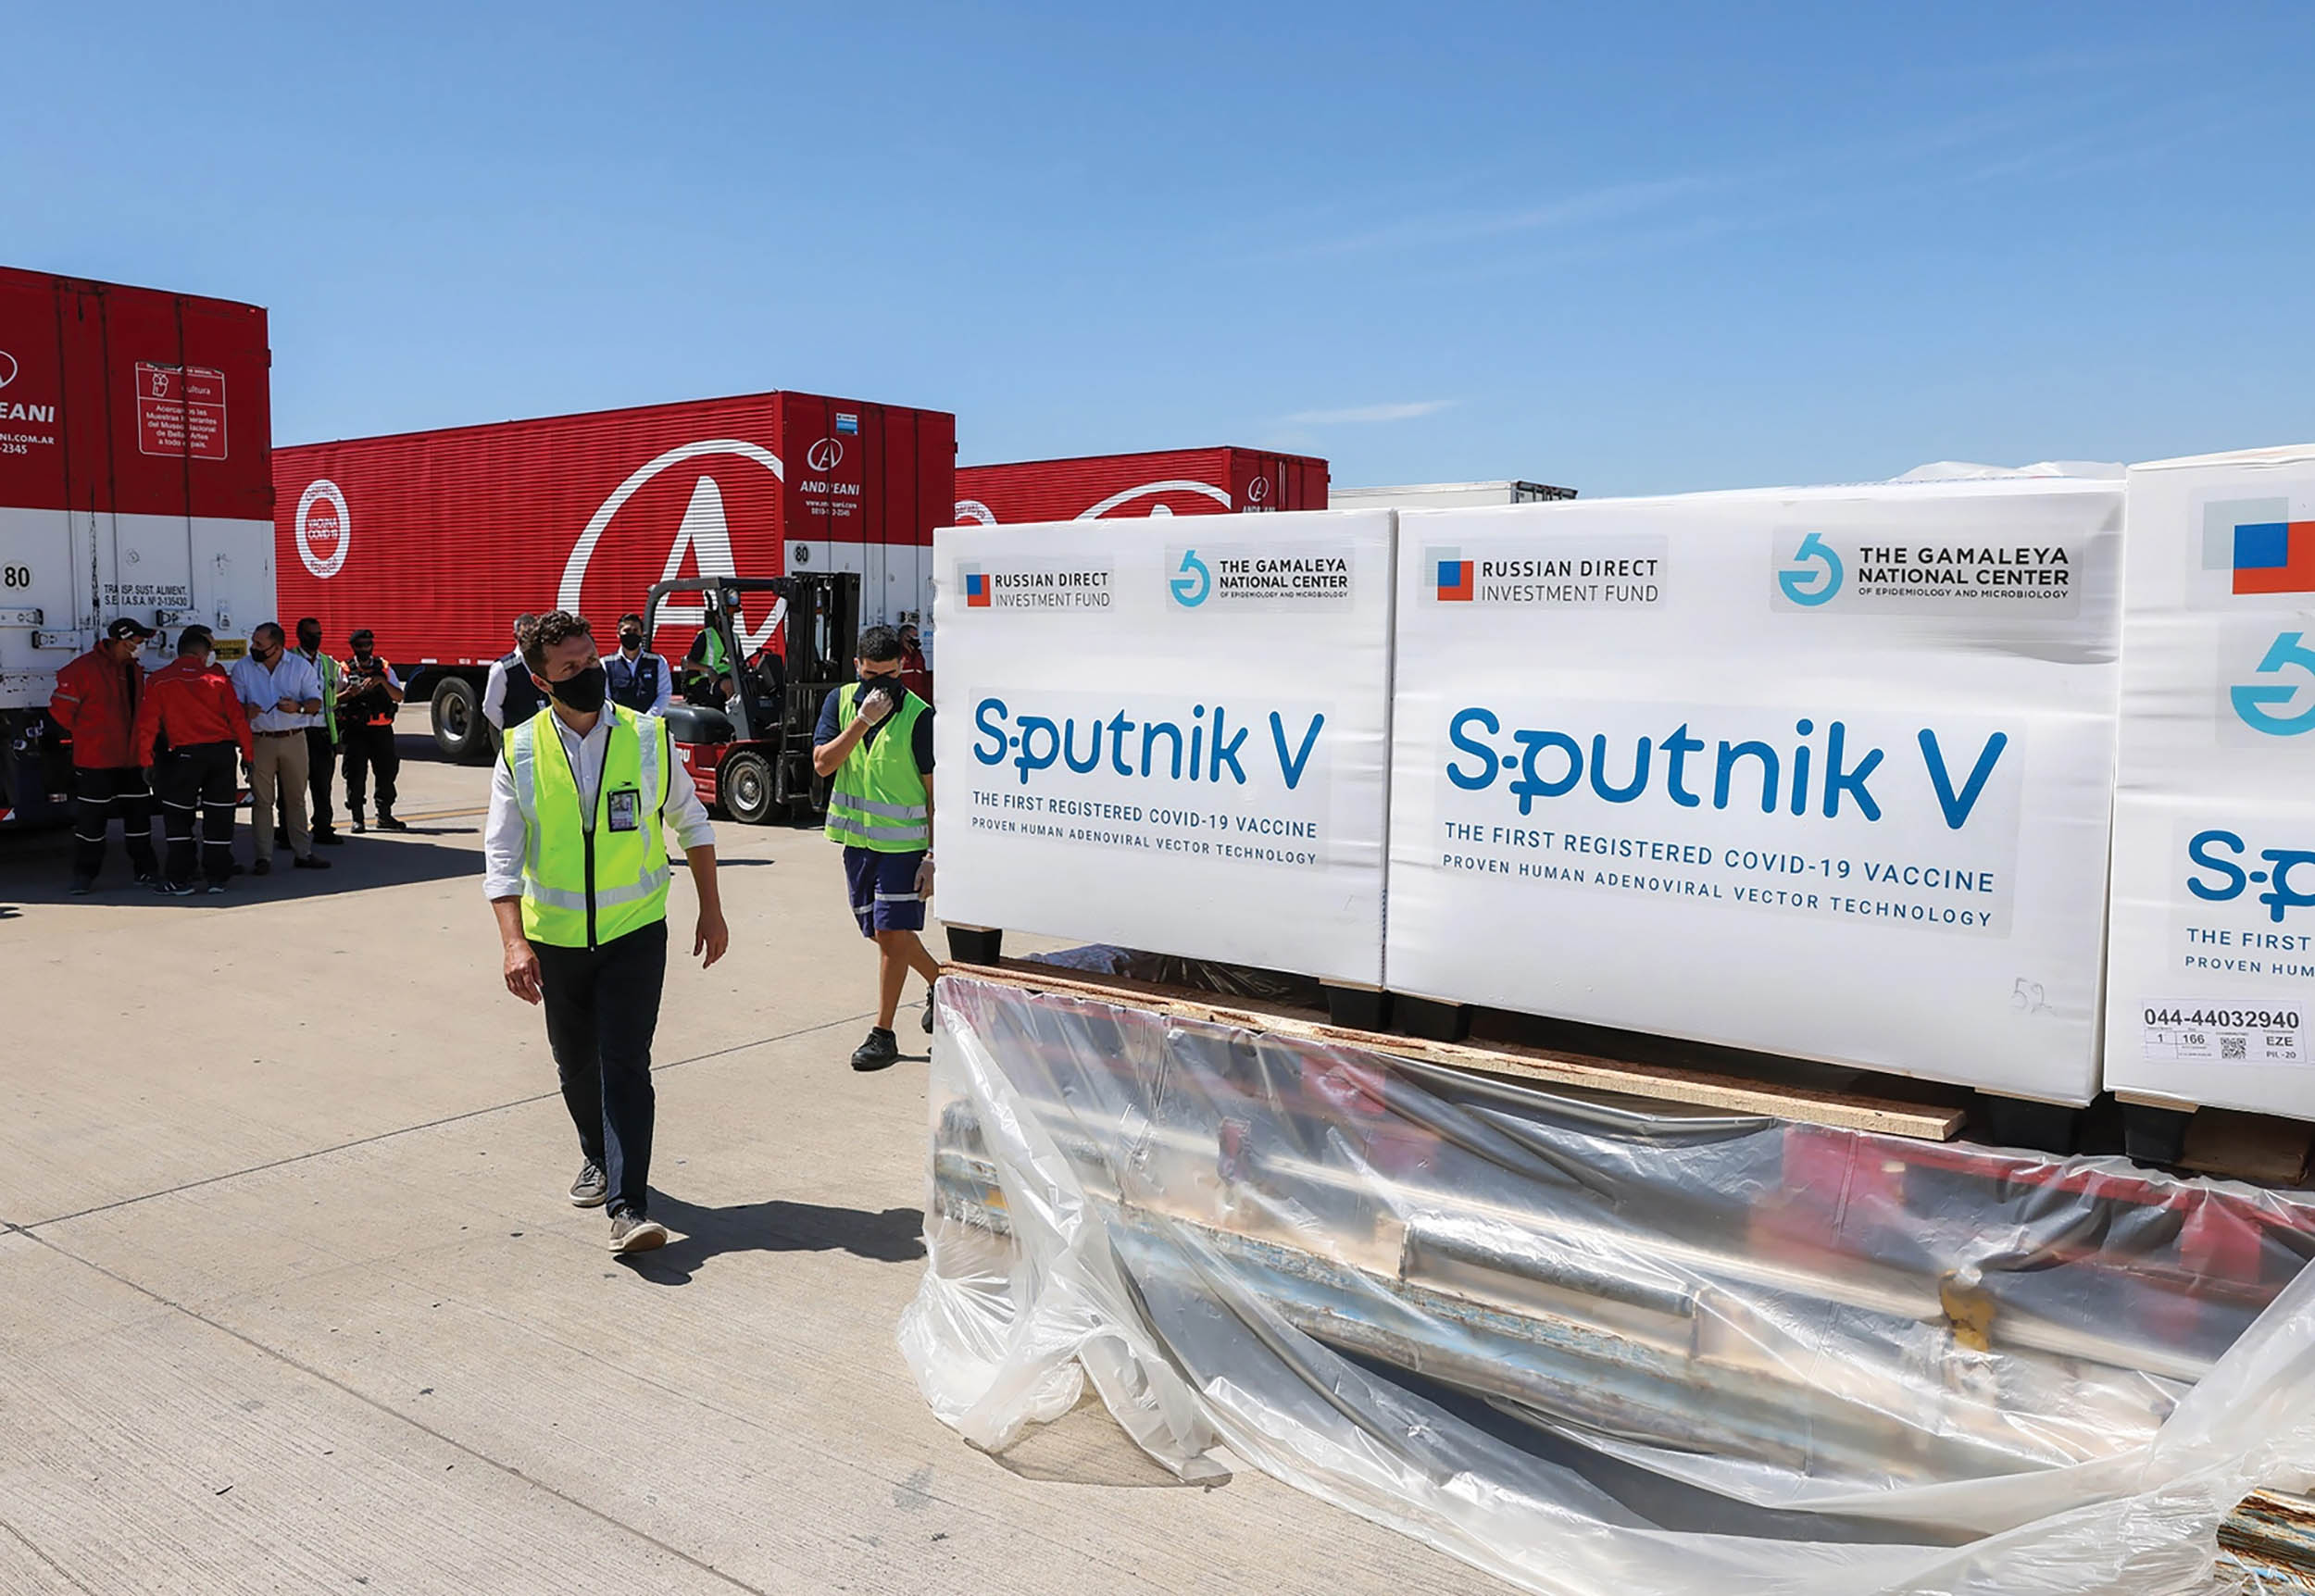 Arrival of first batch of Sputnik V vaccines to Argentina